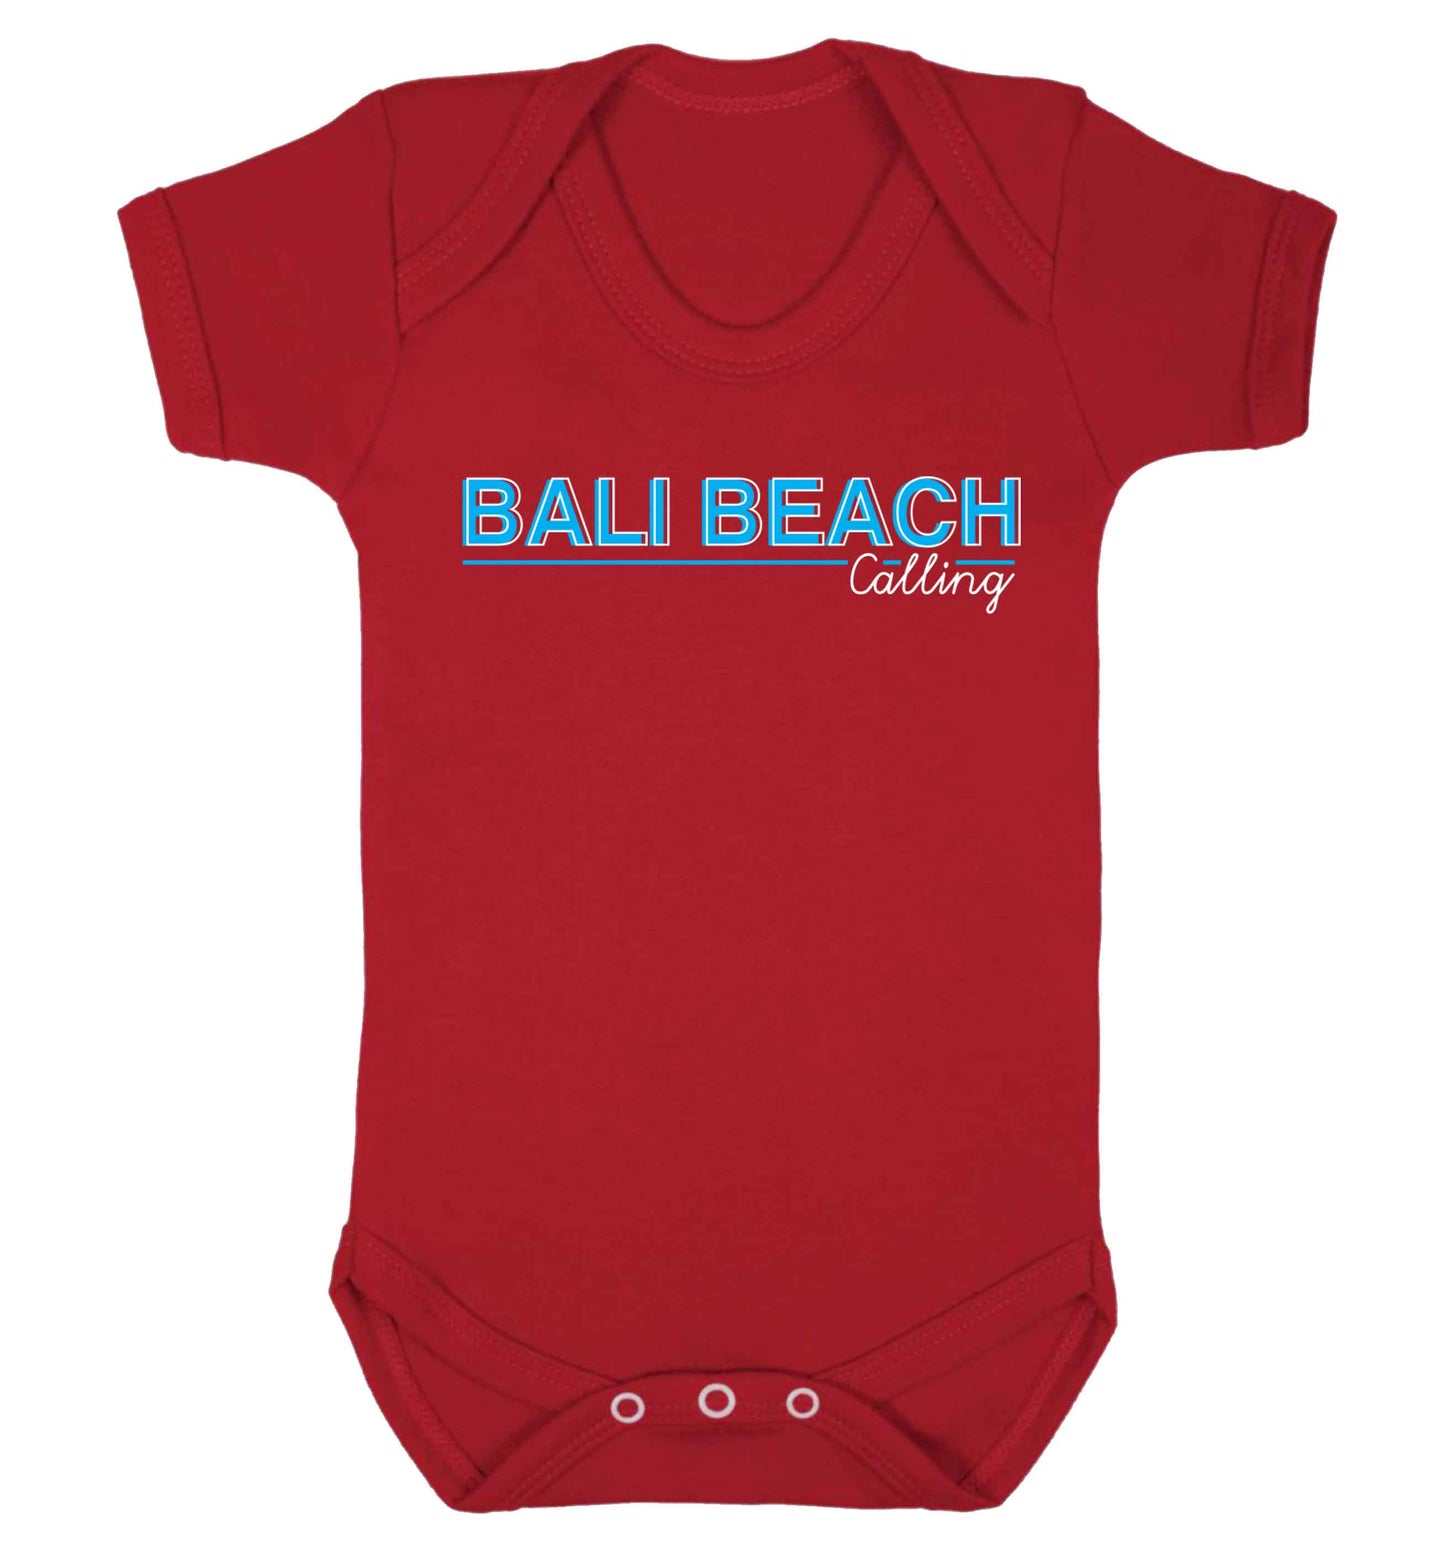 Bali beach calling Baby Vest red 18-24 months